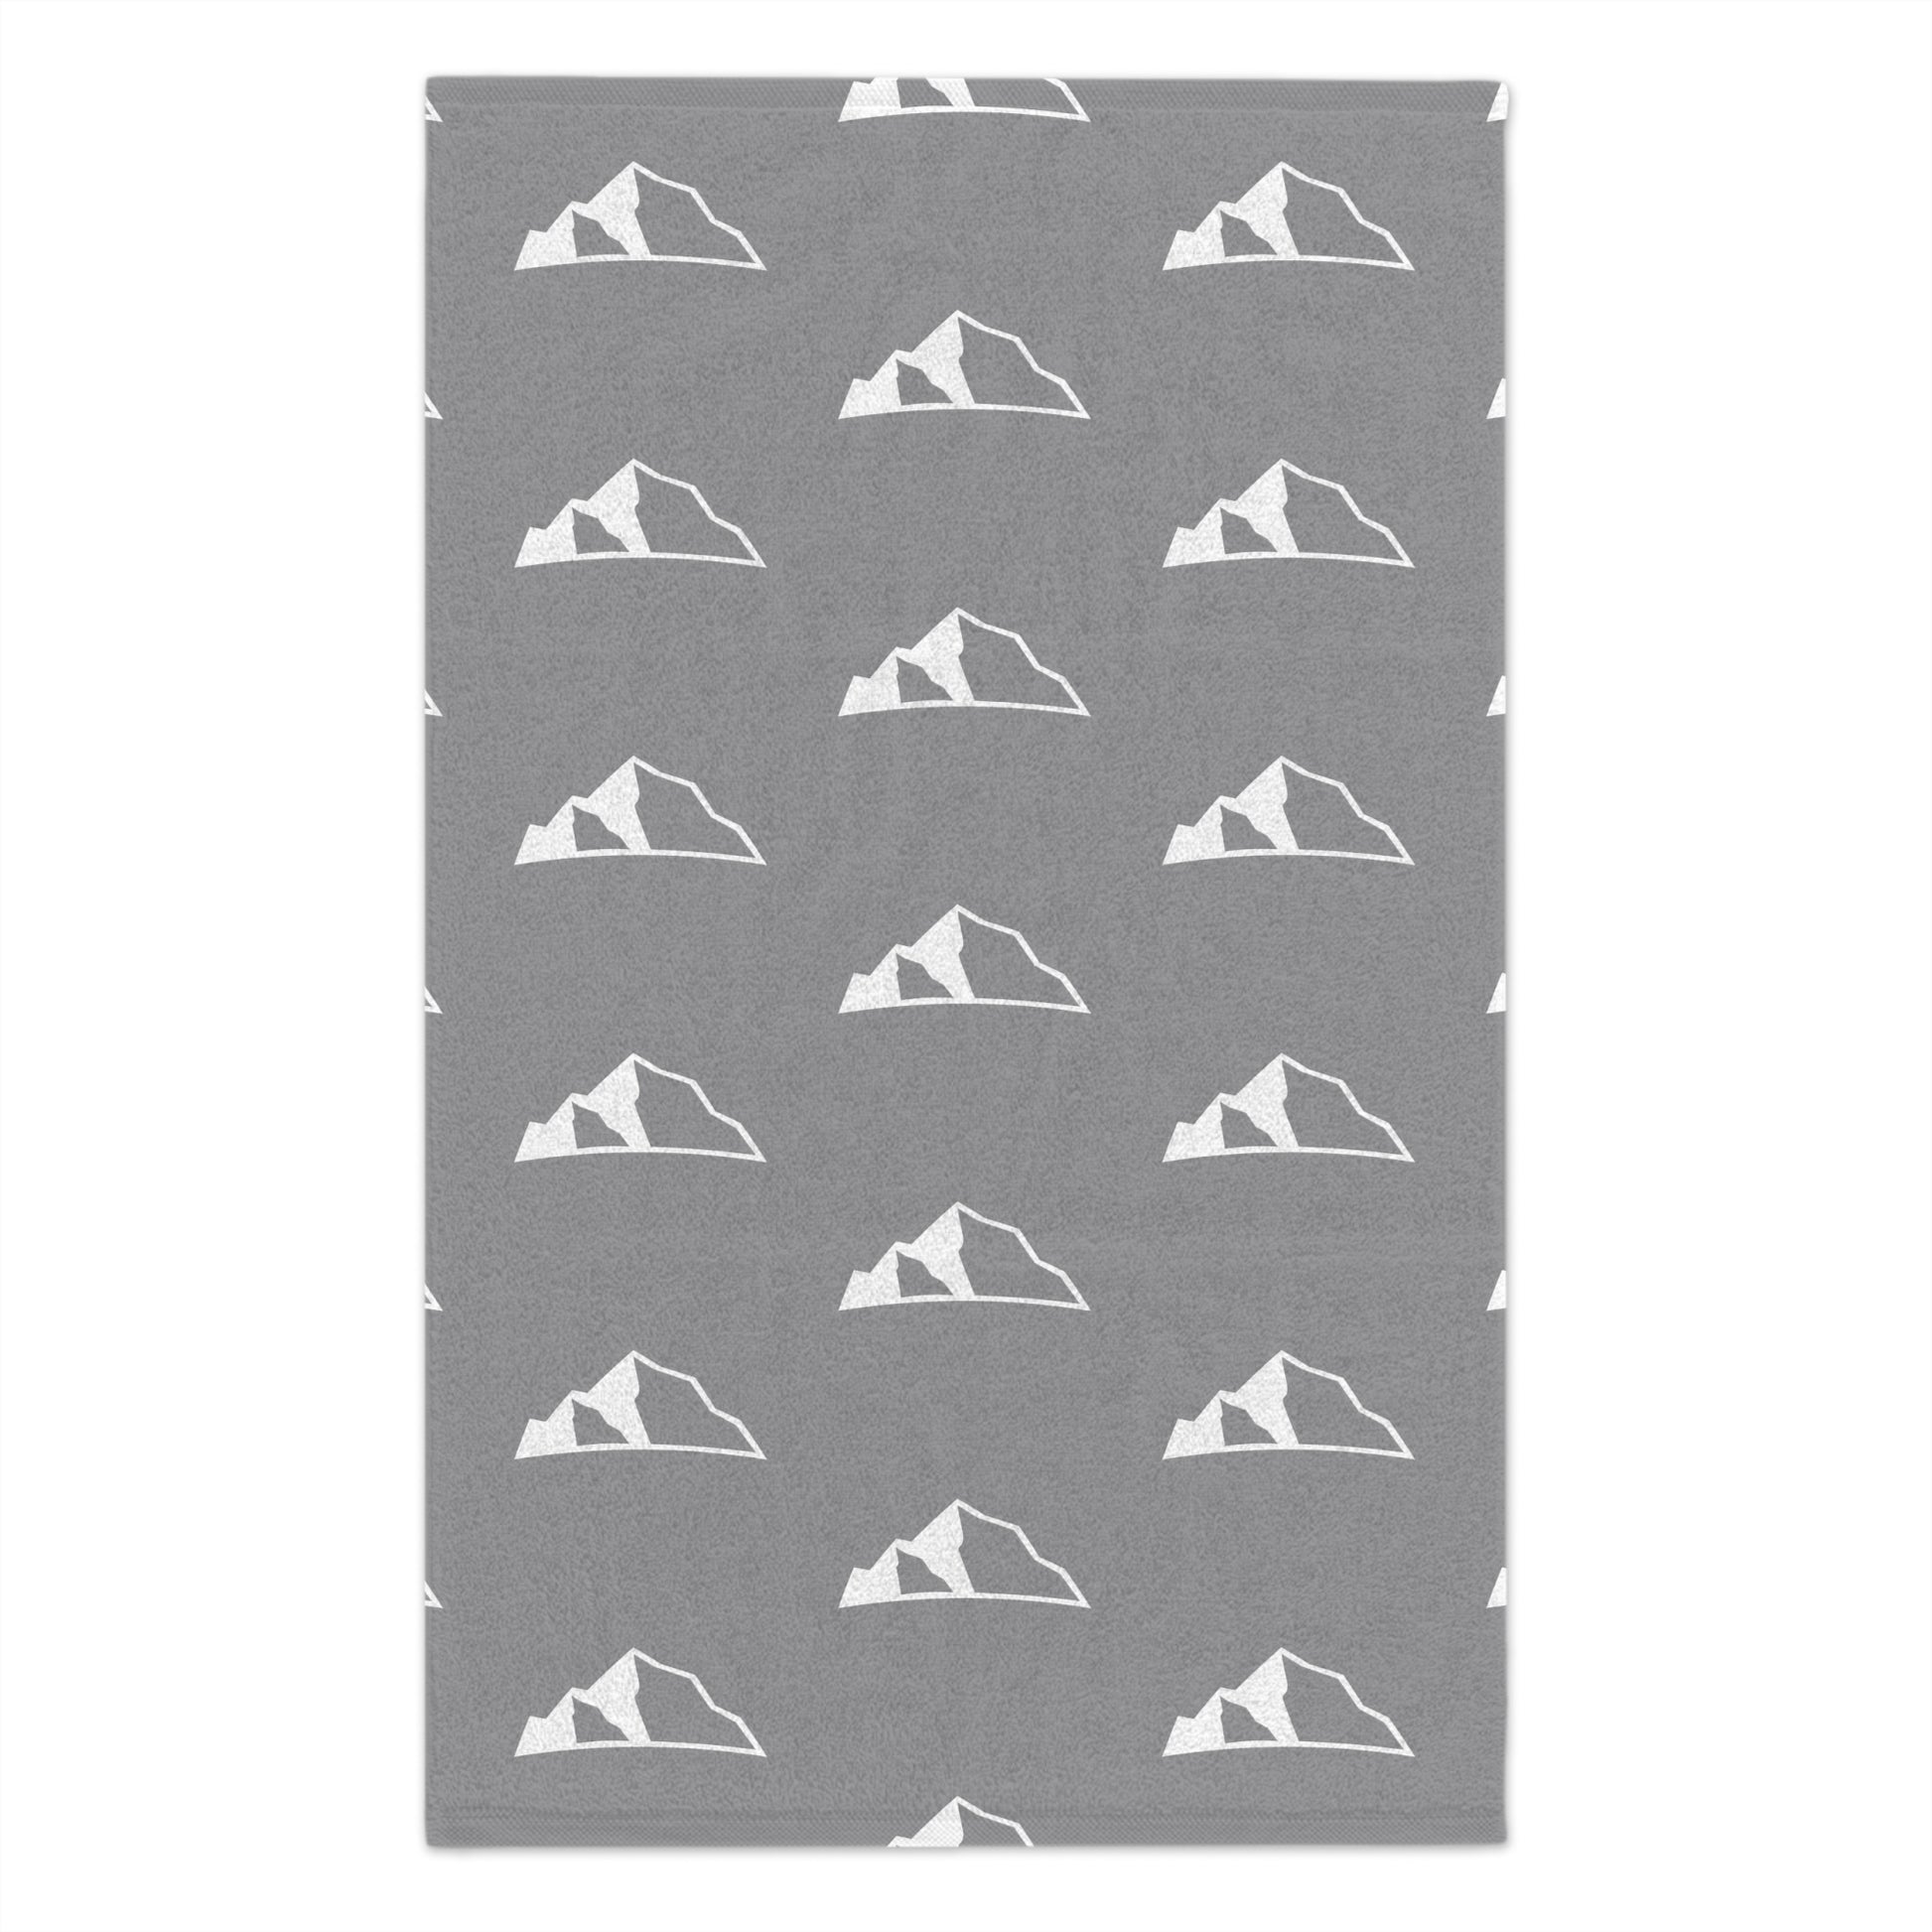 UPDG Mountain icon towel